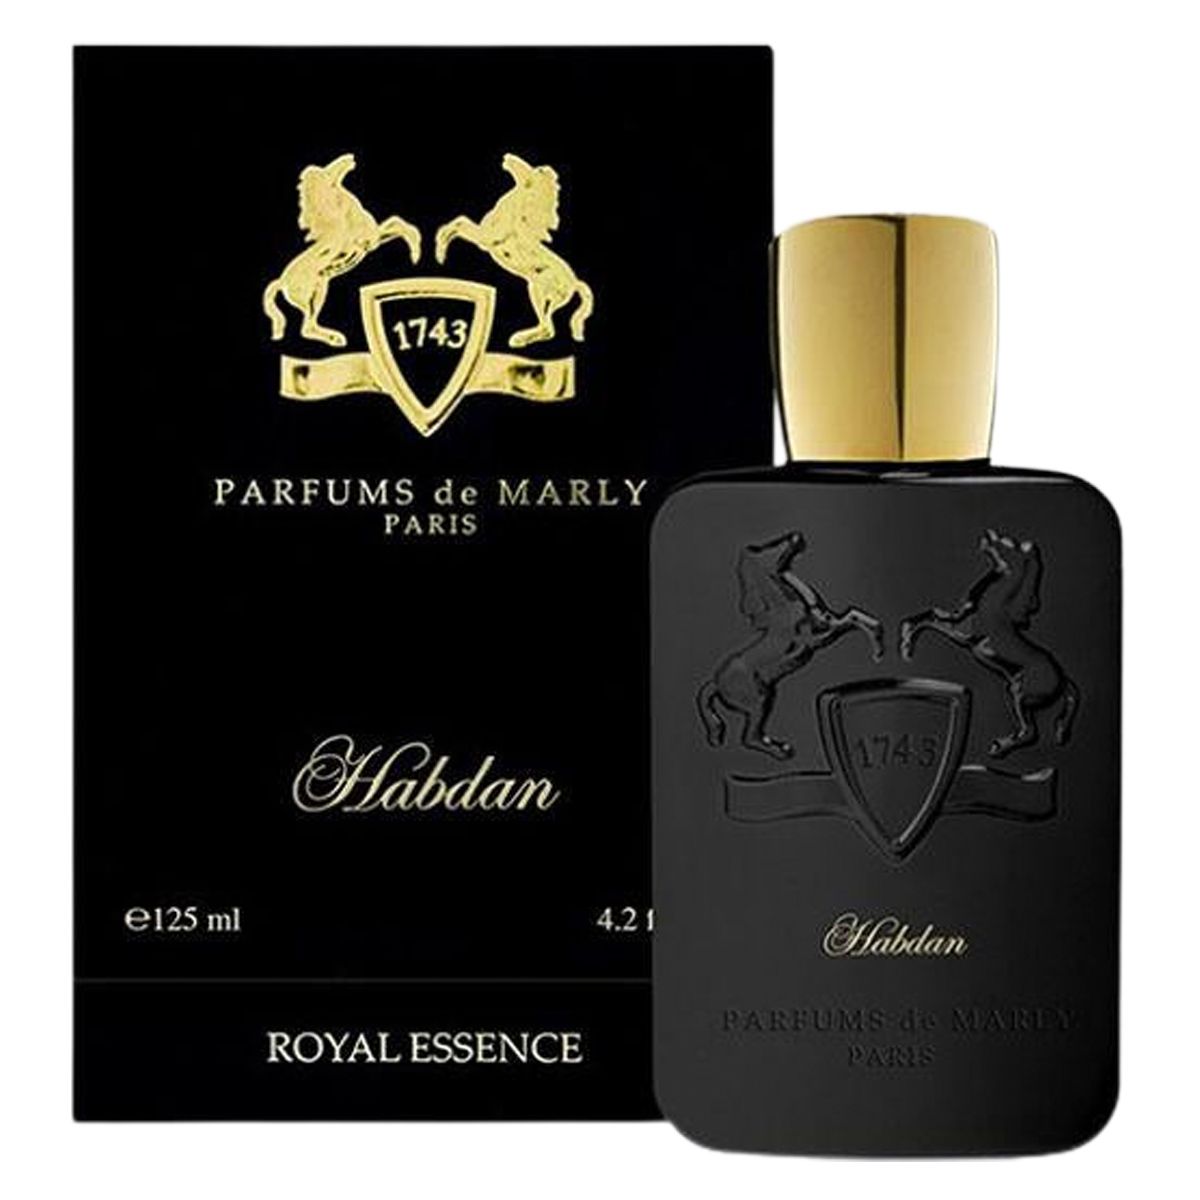  Parfums de Marly Habdan 